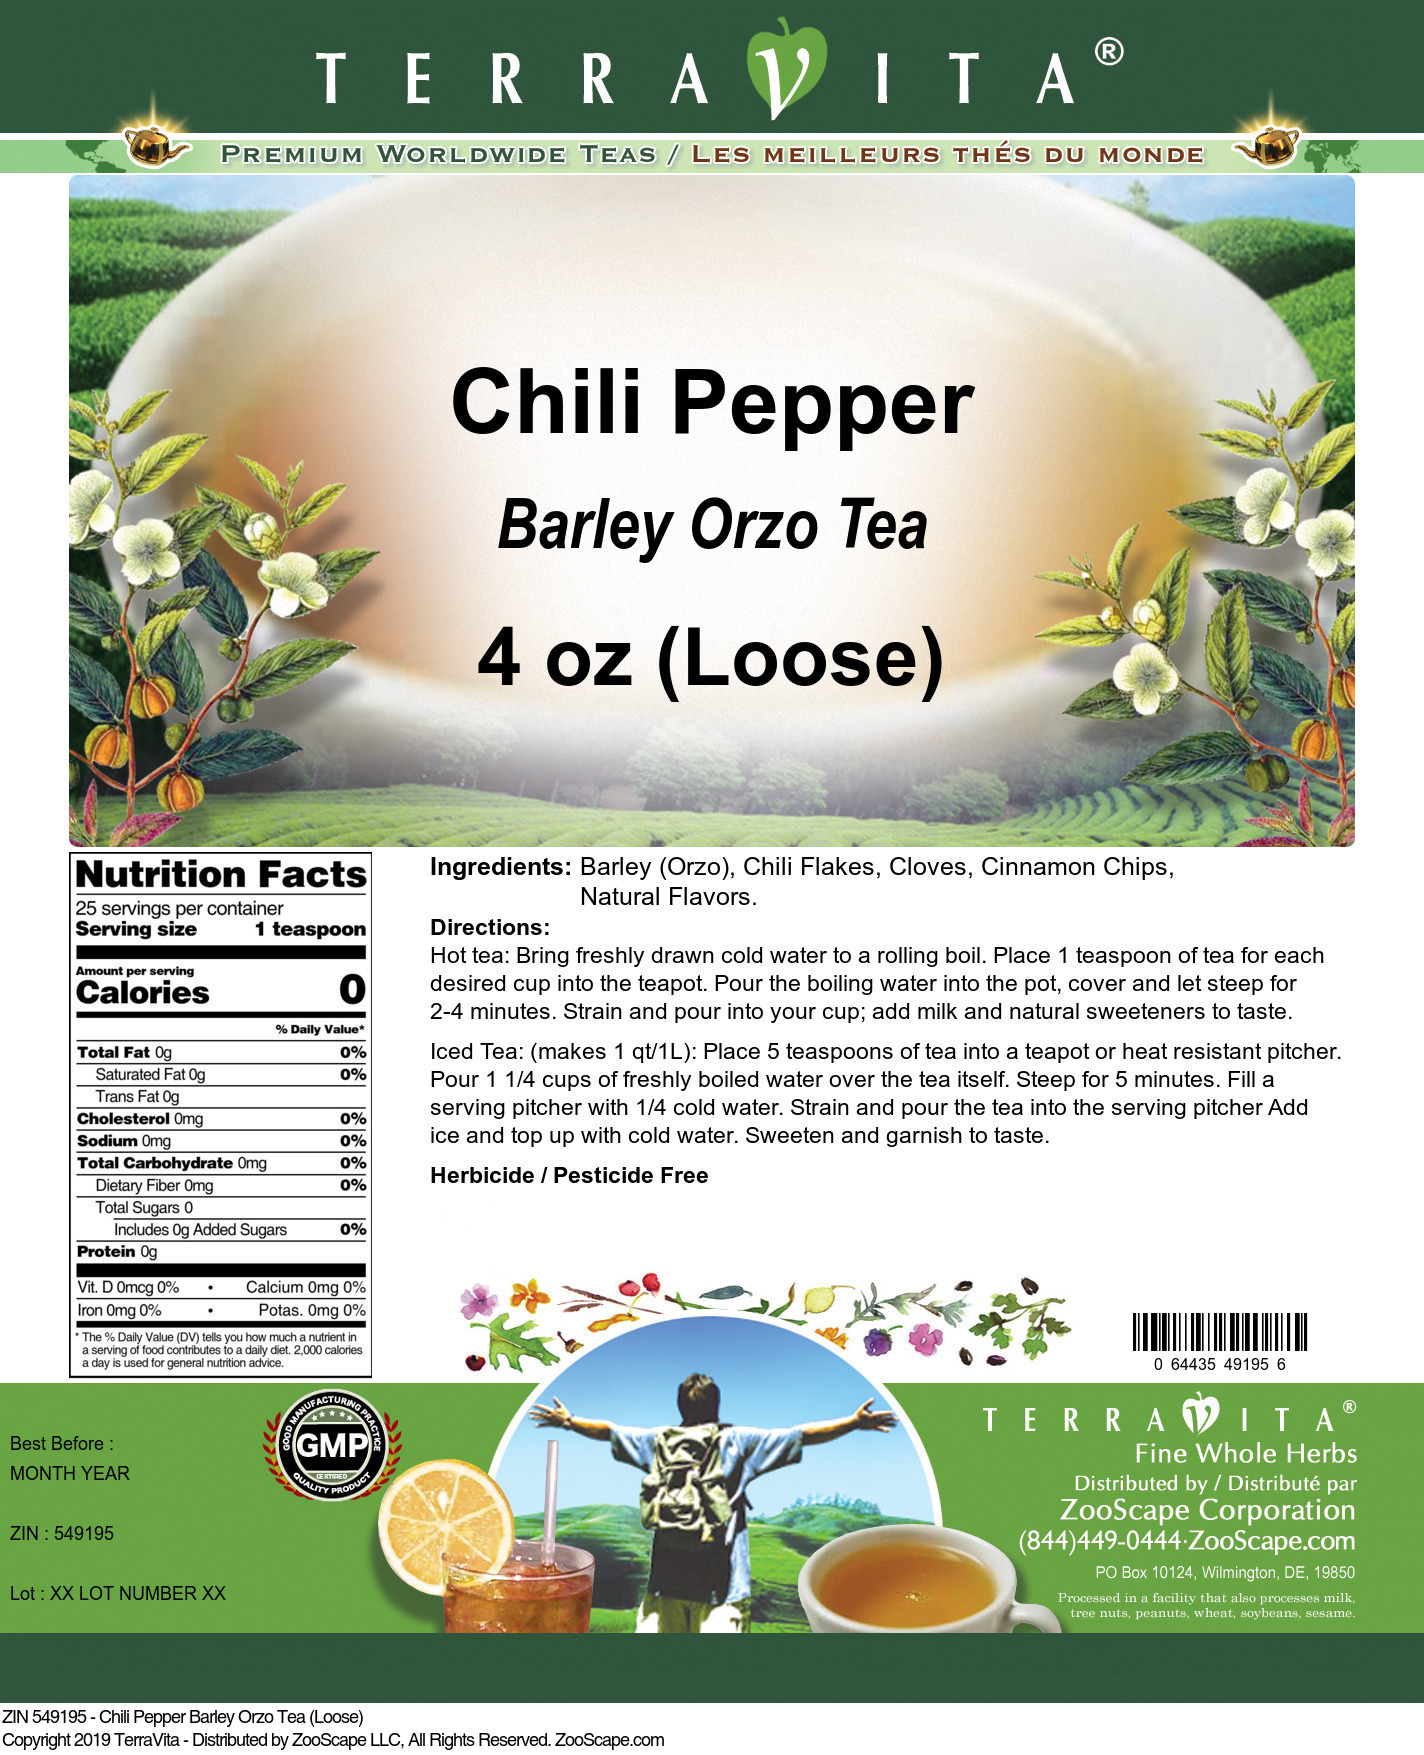 Chili Pepper Barley Orzo Tea (Loose) - Label